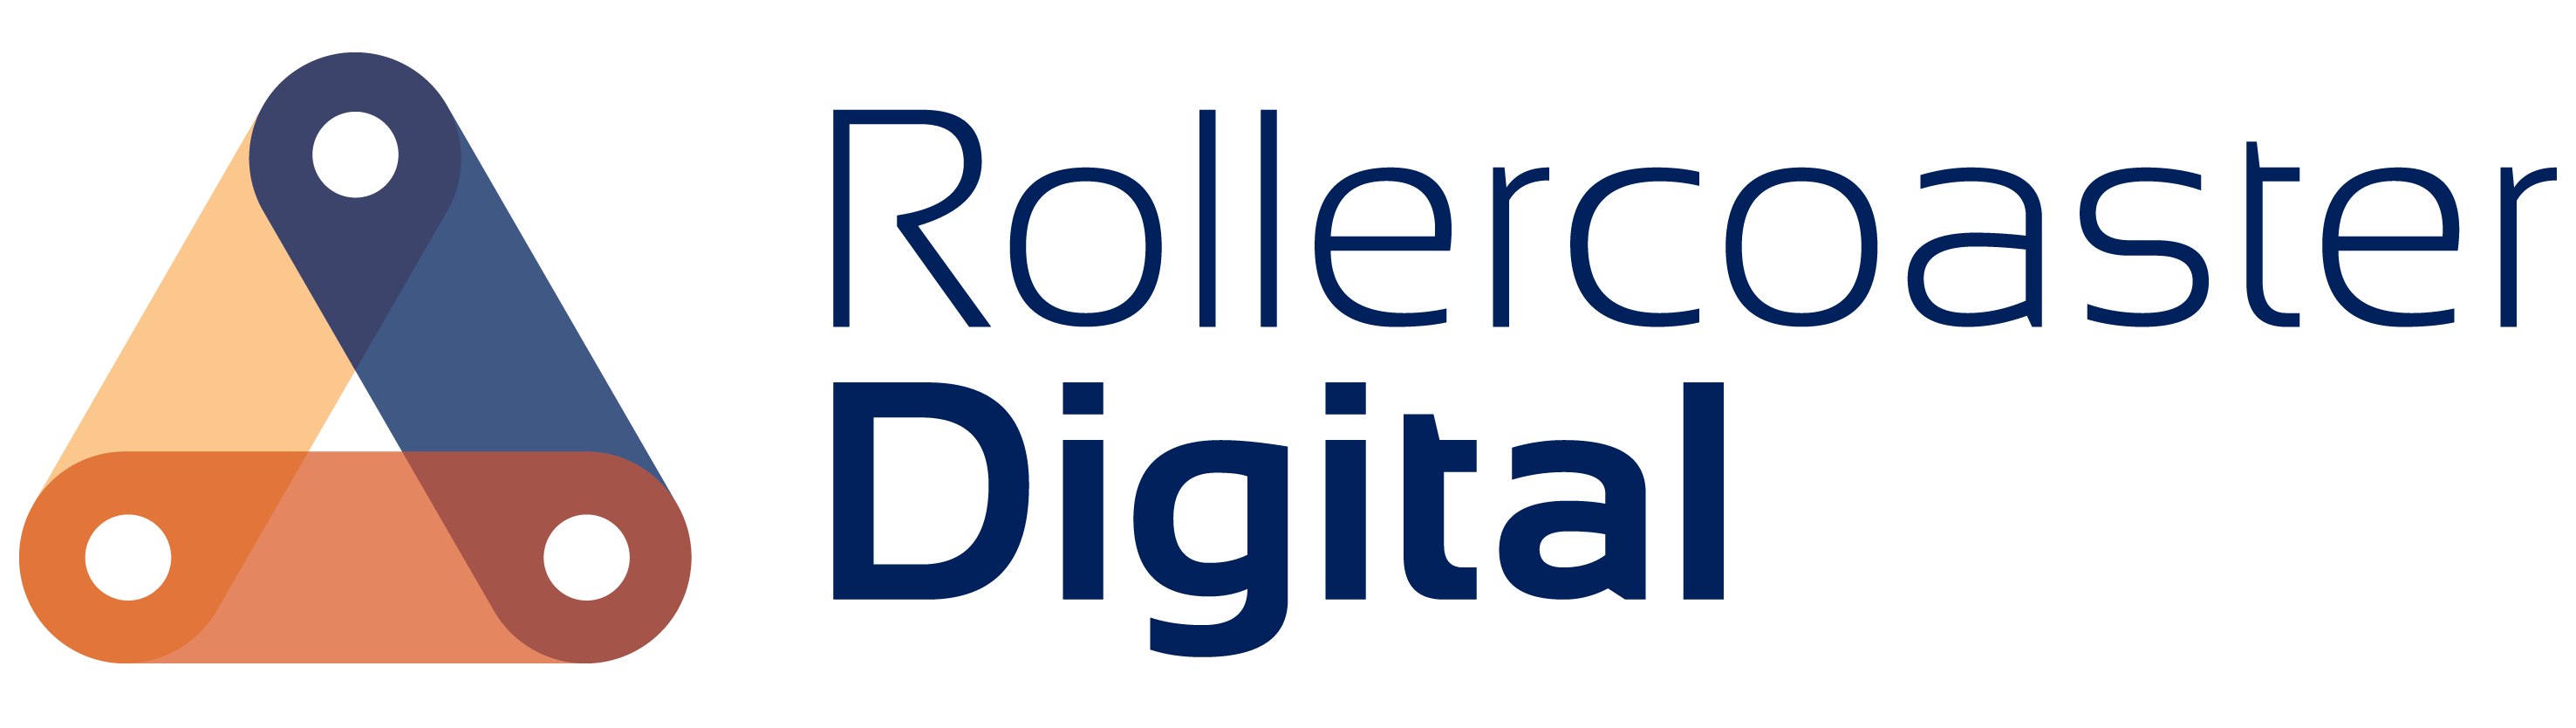 Rollercoaster Digital